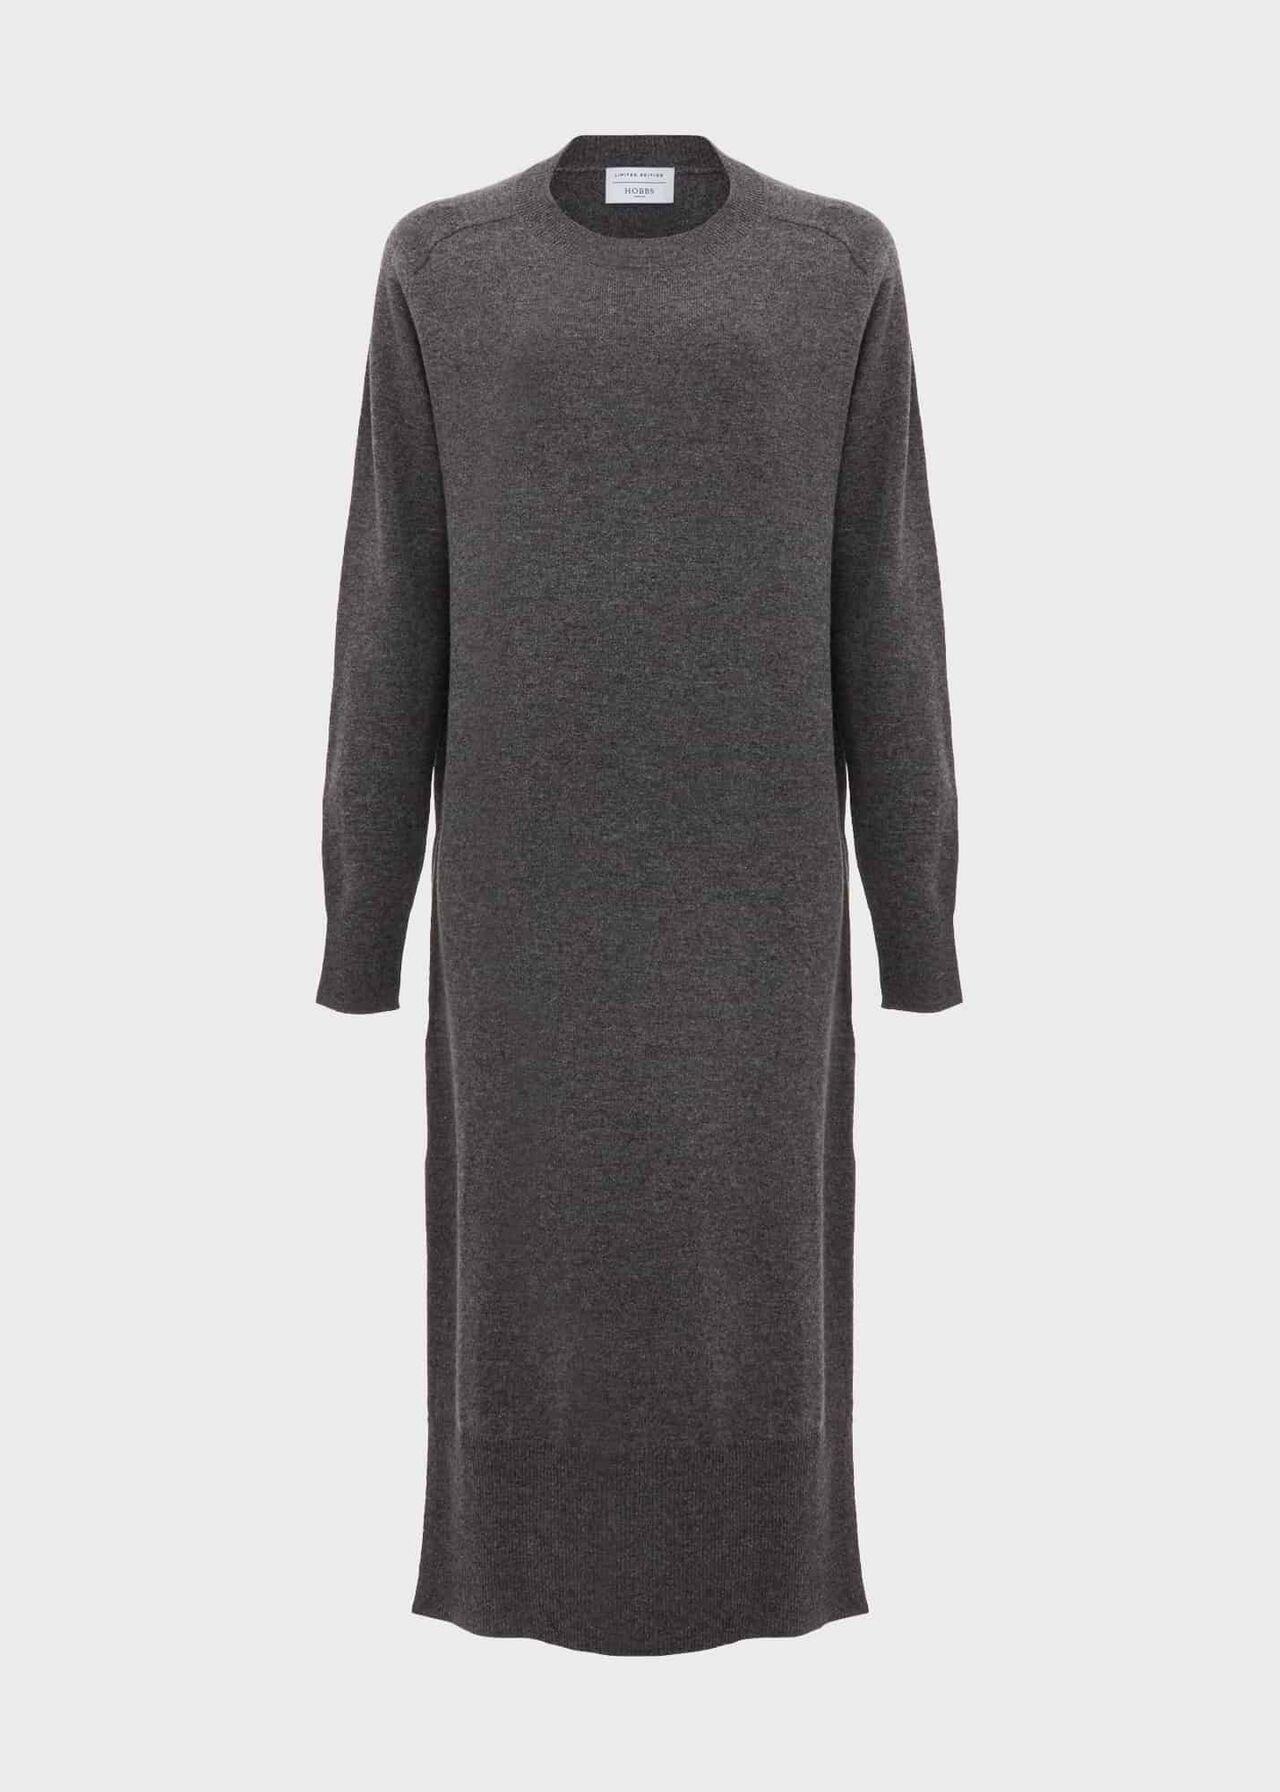 Geneva Knitted Dress With Cashmere, Dark Grey Marl, hi-res